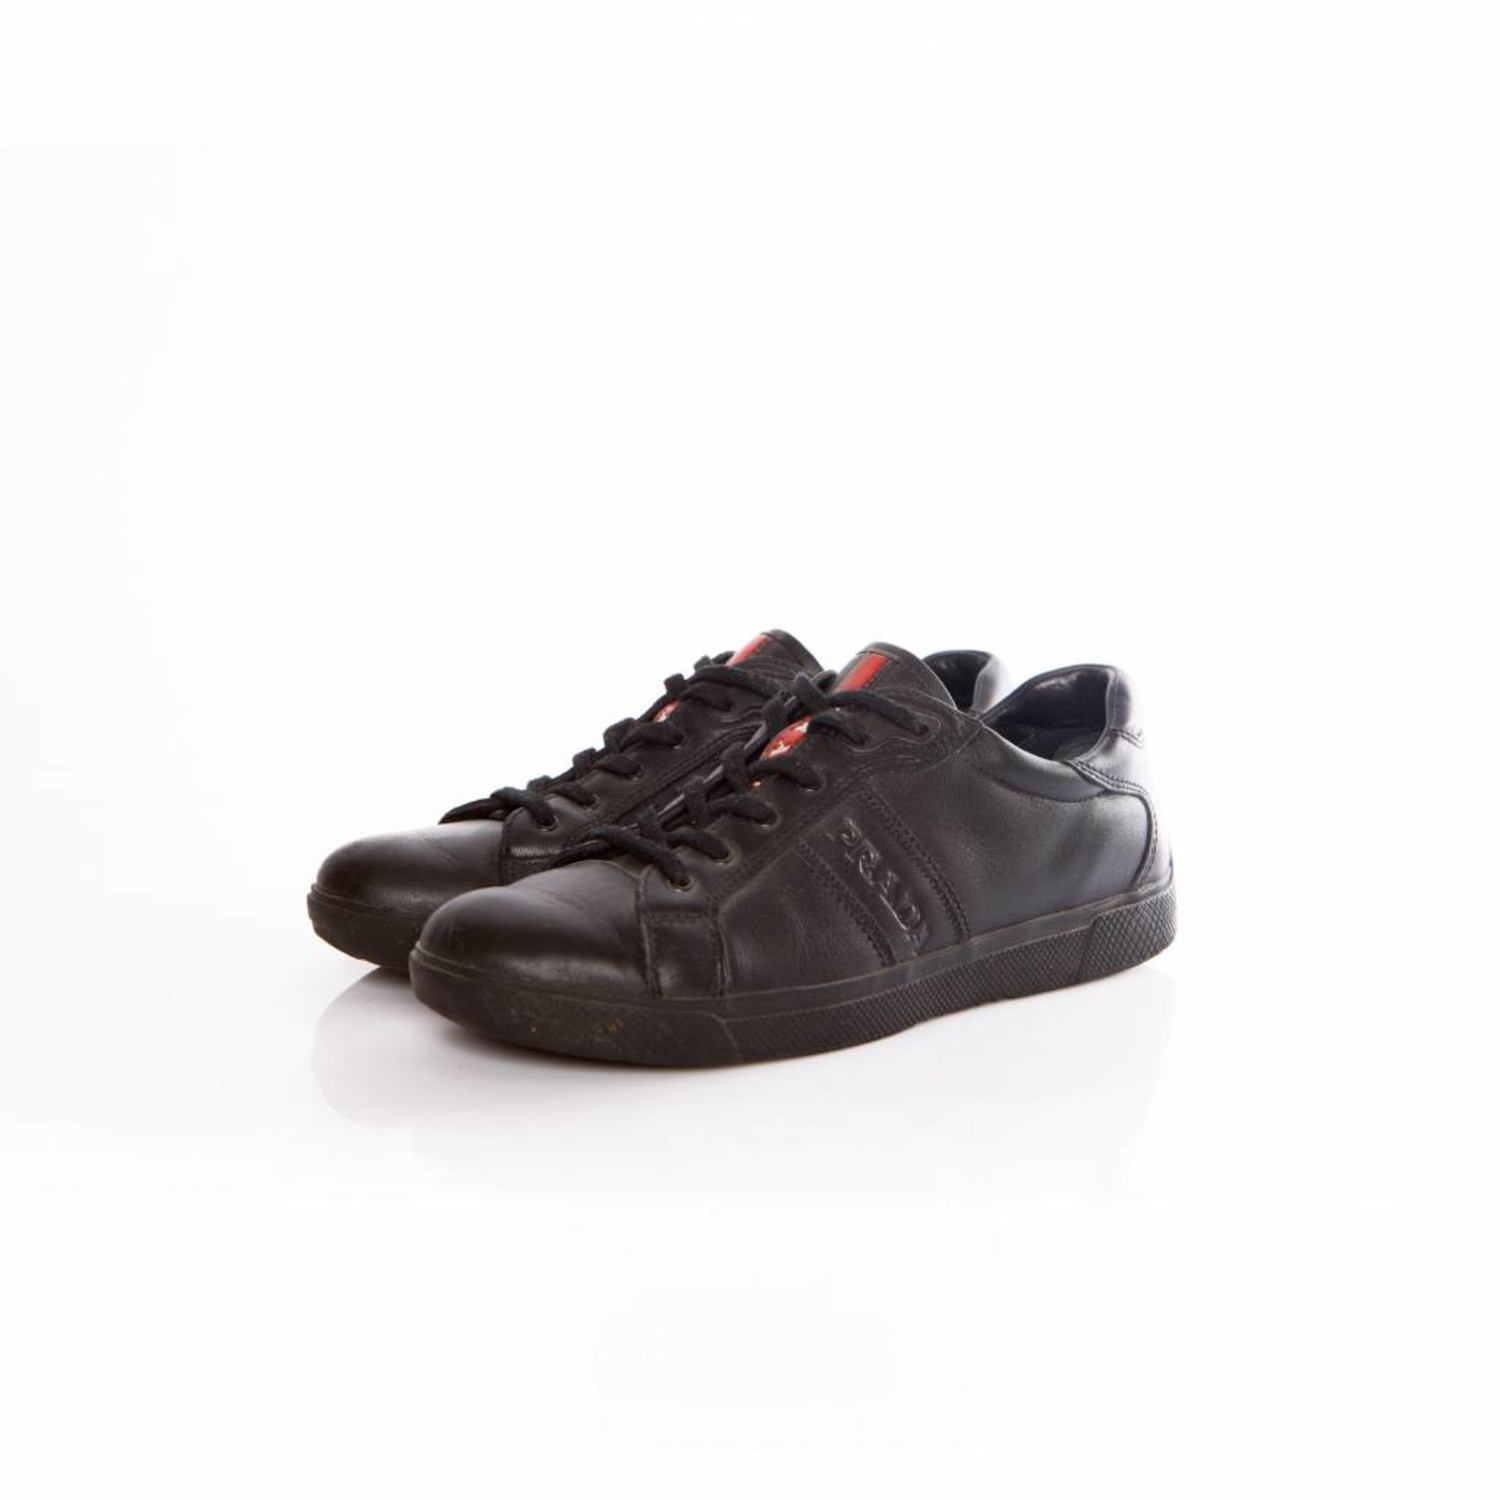 Aggregaat Weerkaatsing zonde Prada, black sneakers with prada logo - Unique Designer Pieces